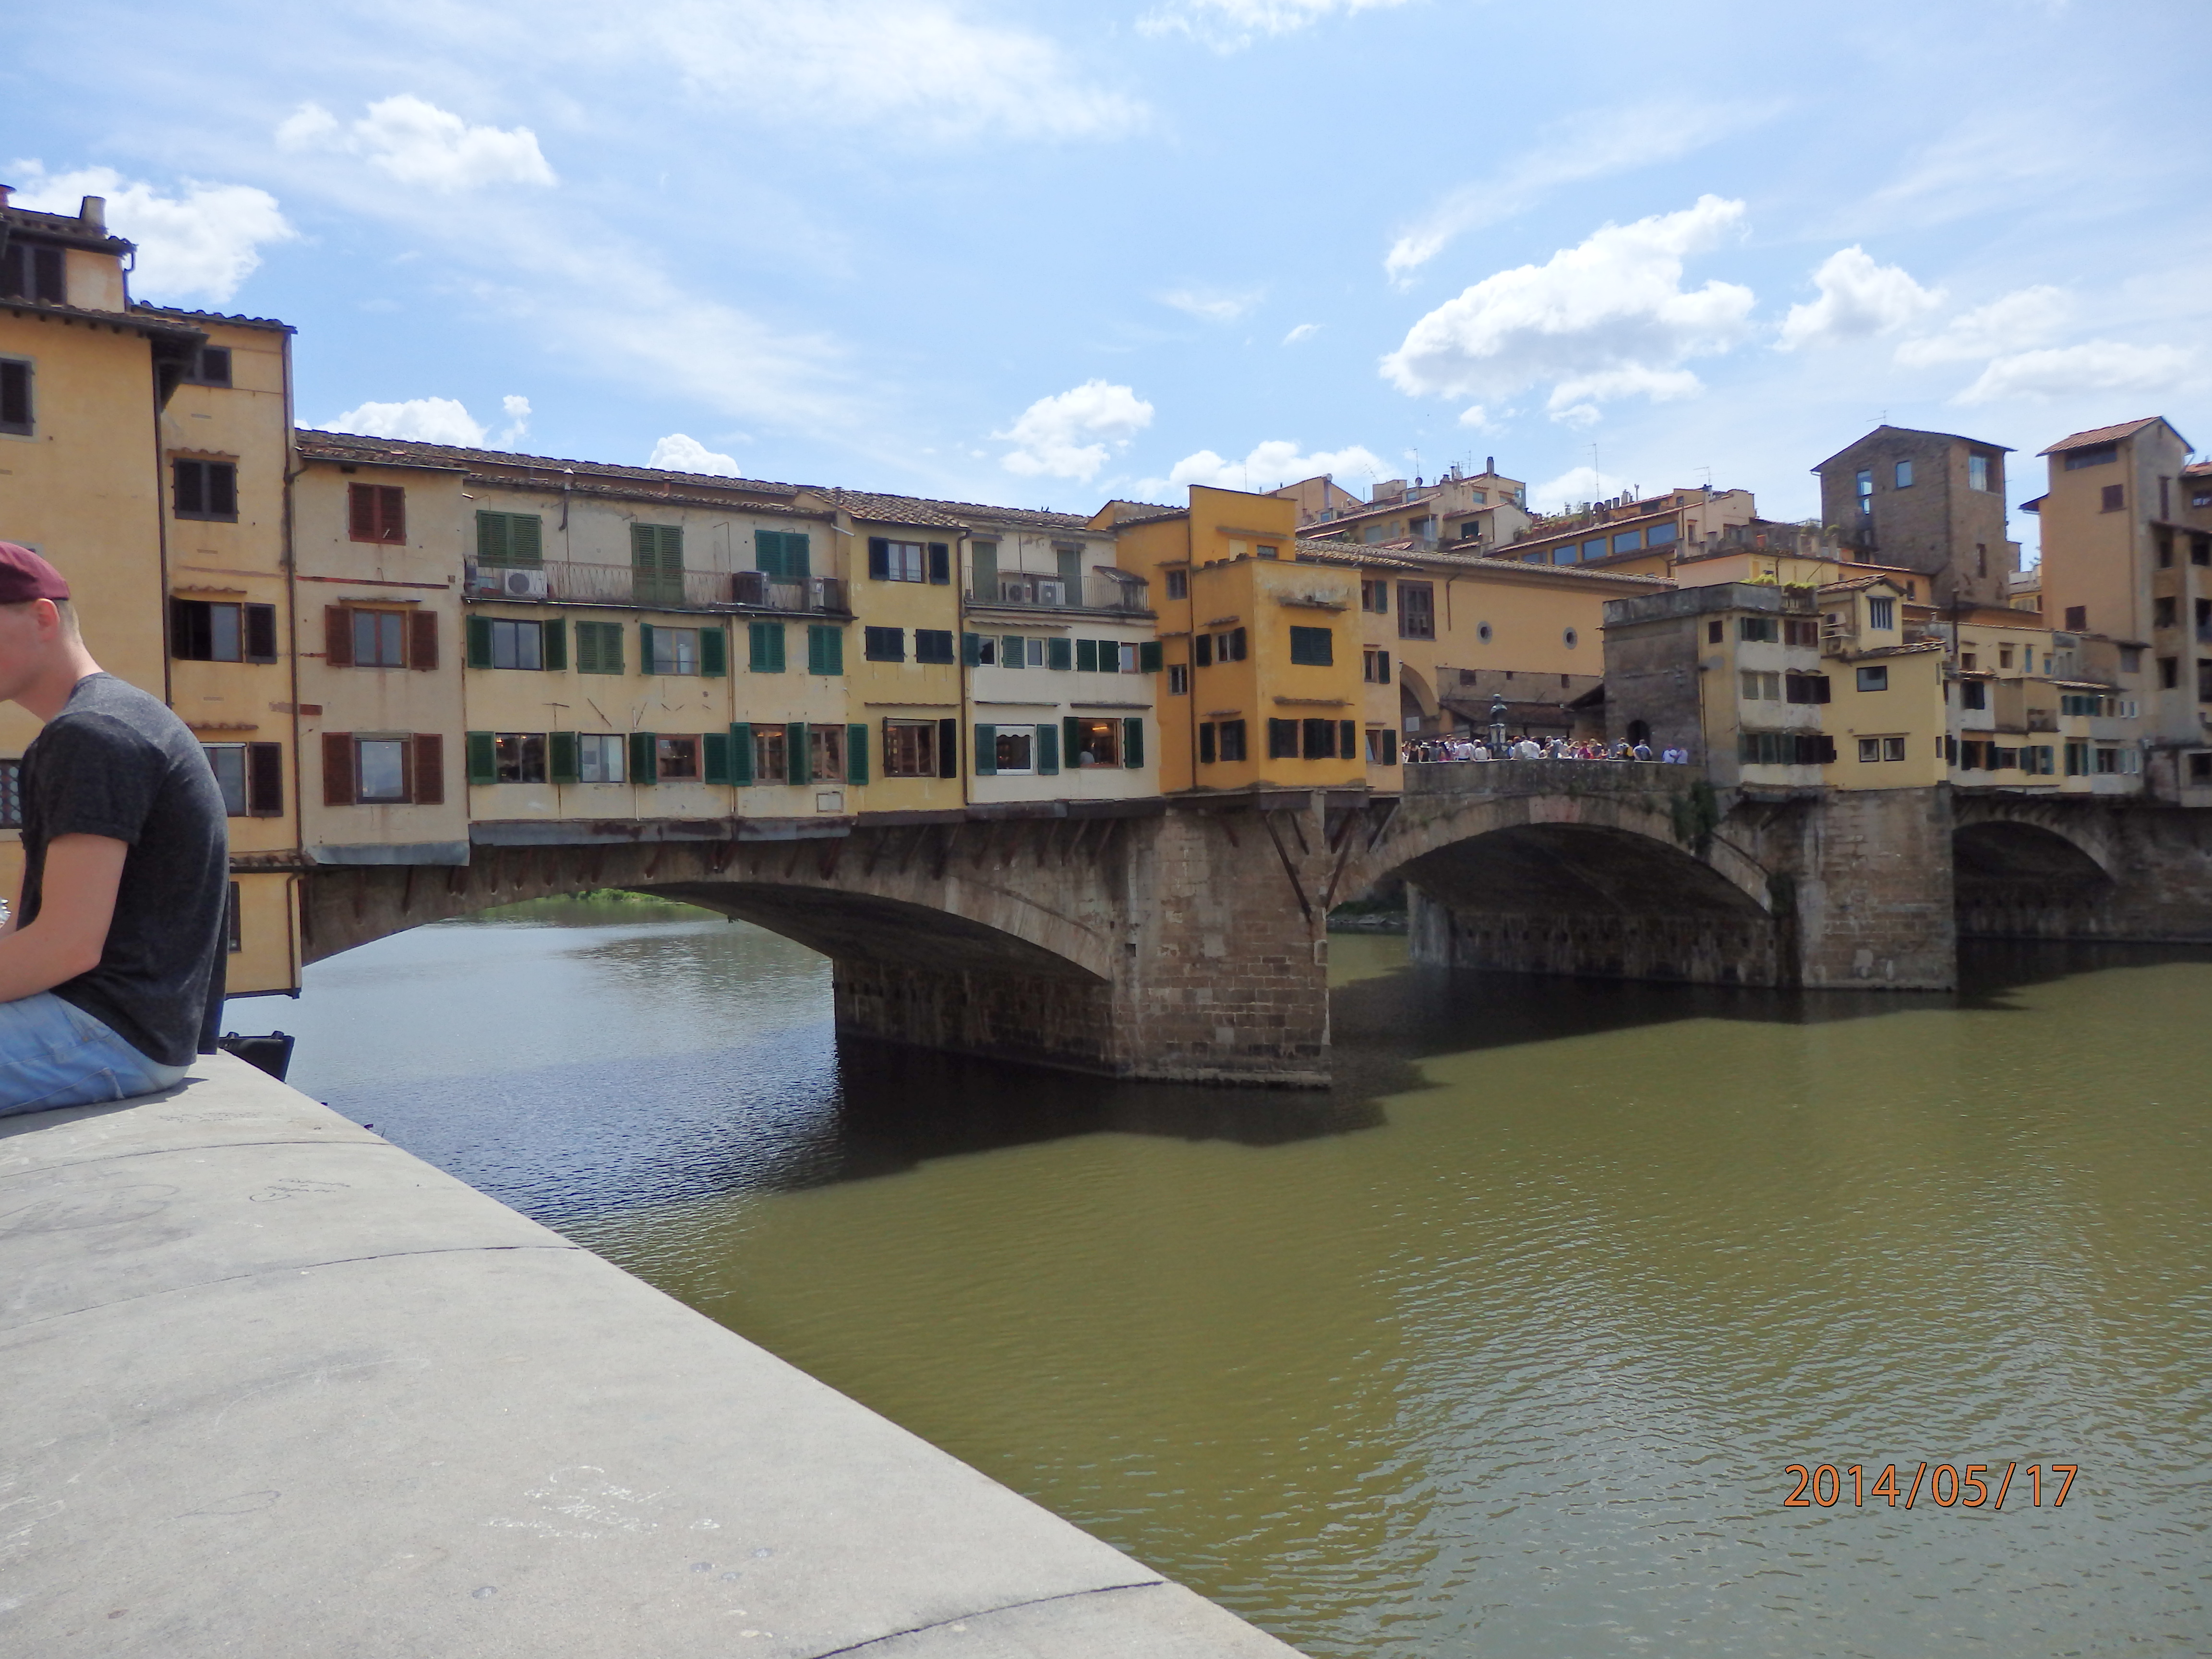 Ponte Vecchio #1 - Keating's